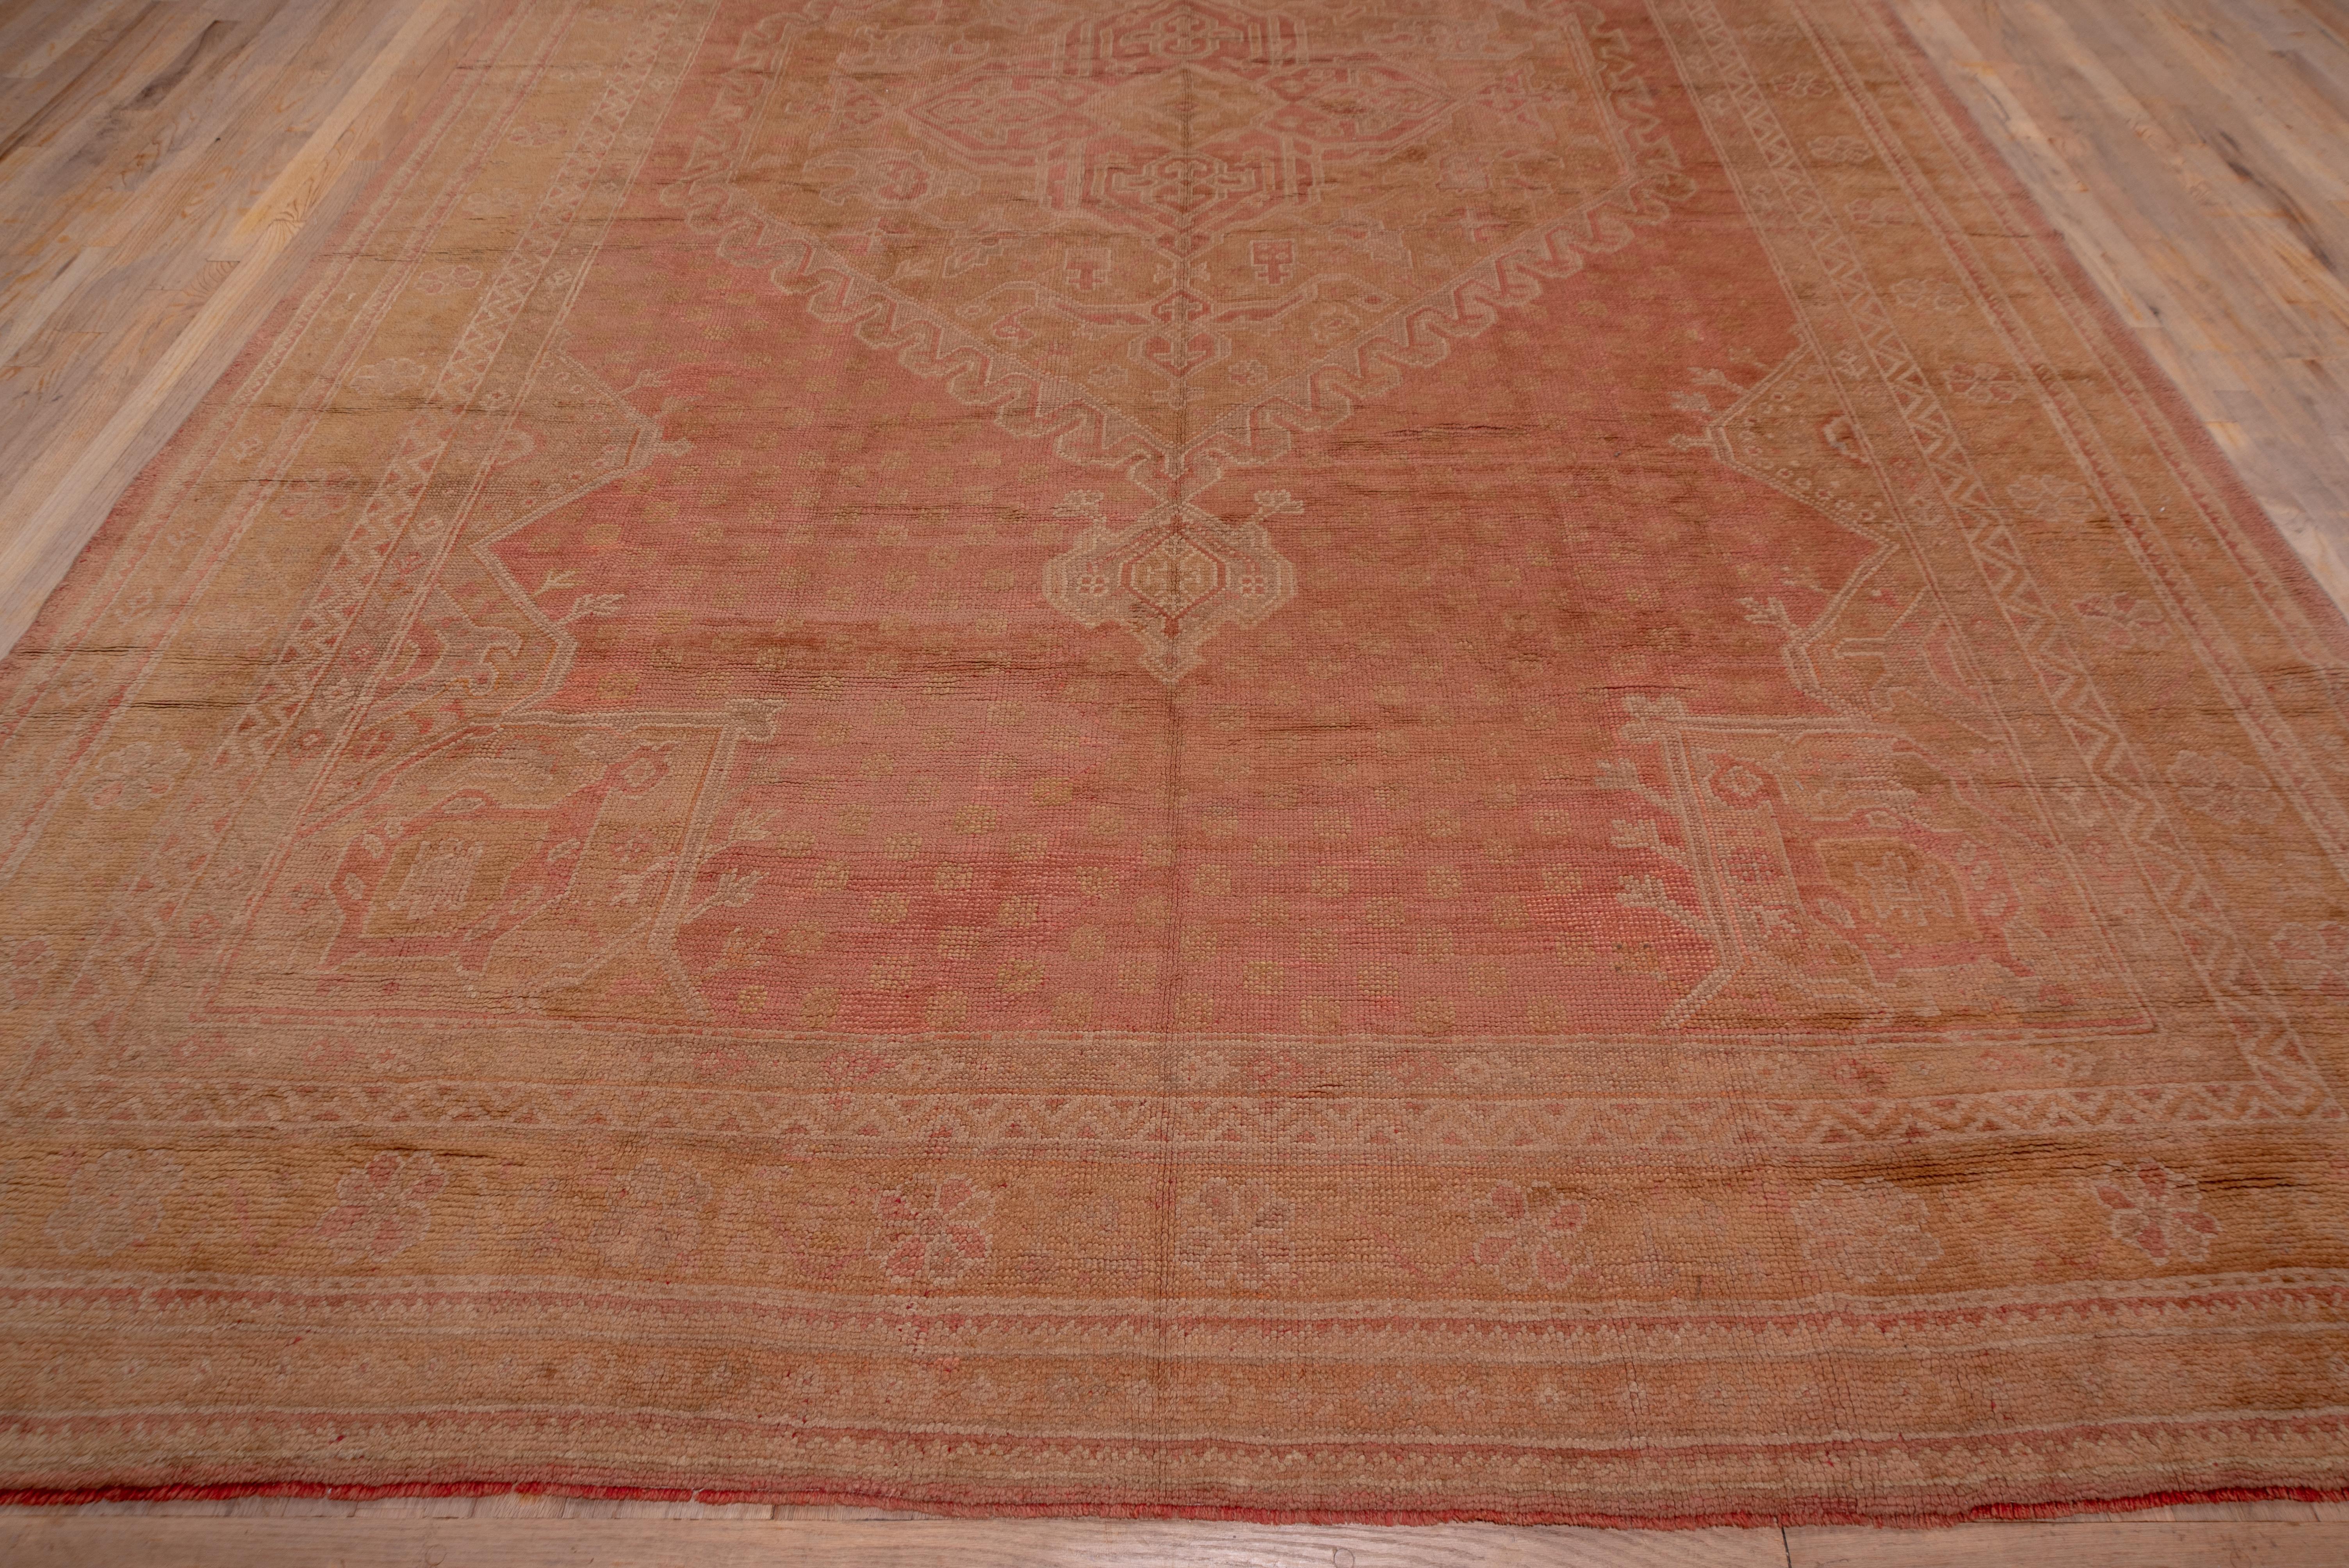 Hand-Knotted Orange Antique Turkish Oushak Carpet For Sale